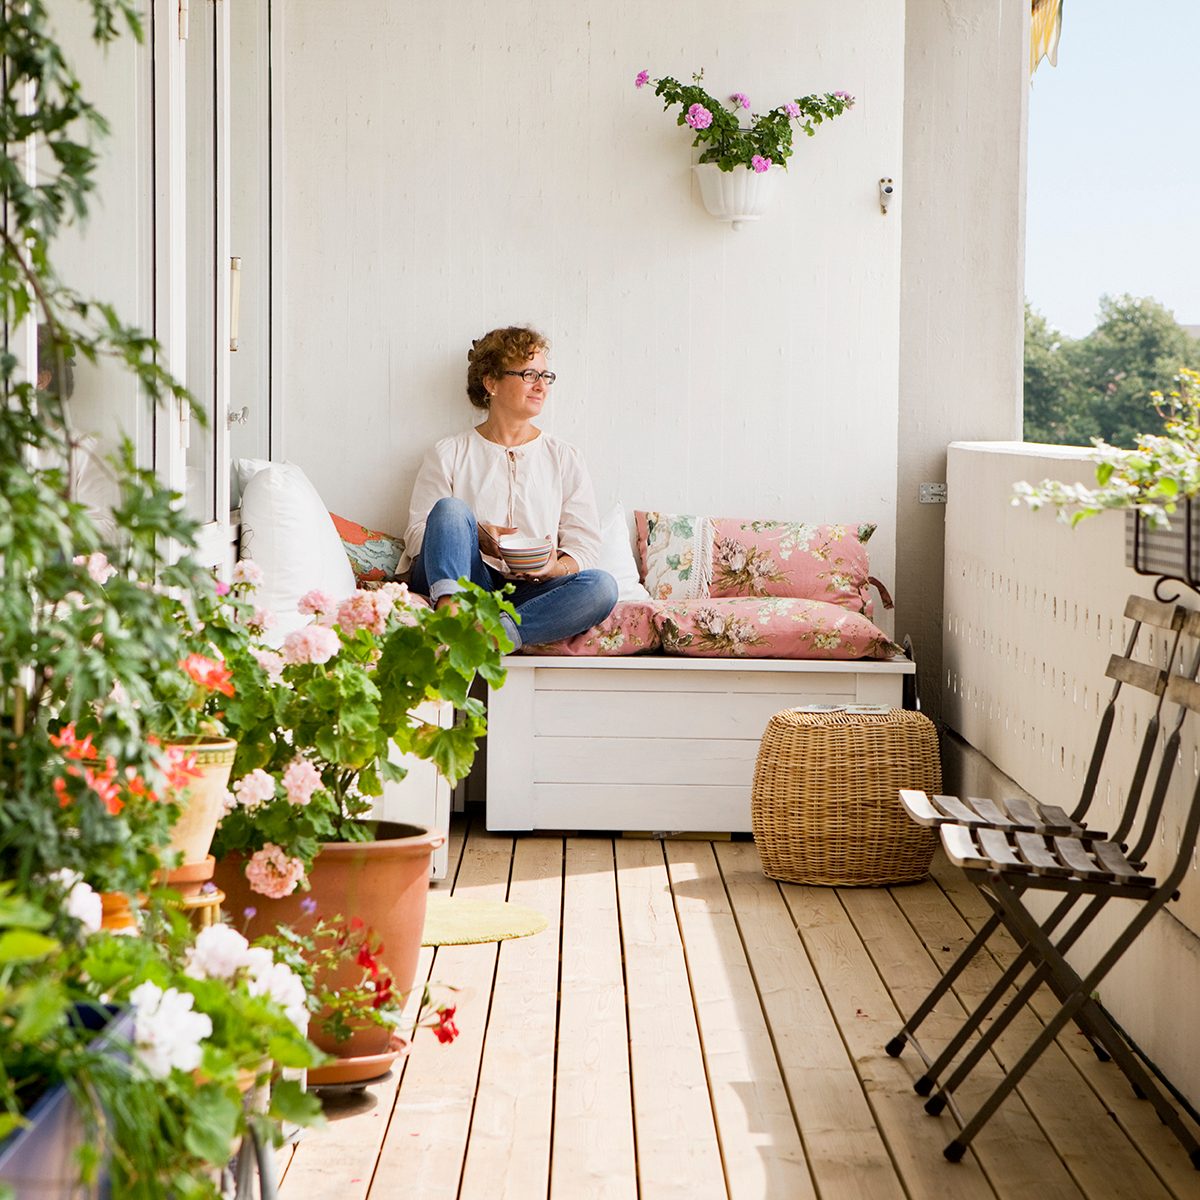 backyard entertainment ideas Woman Relaxing On Balcony